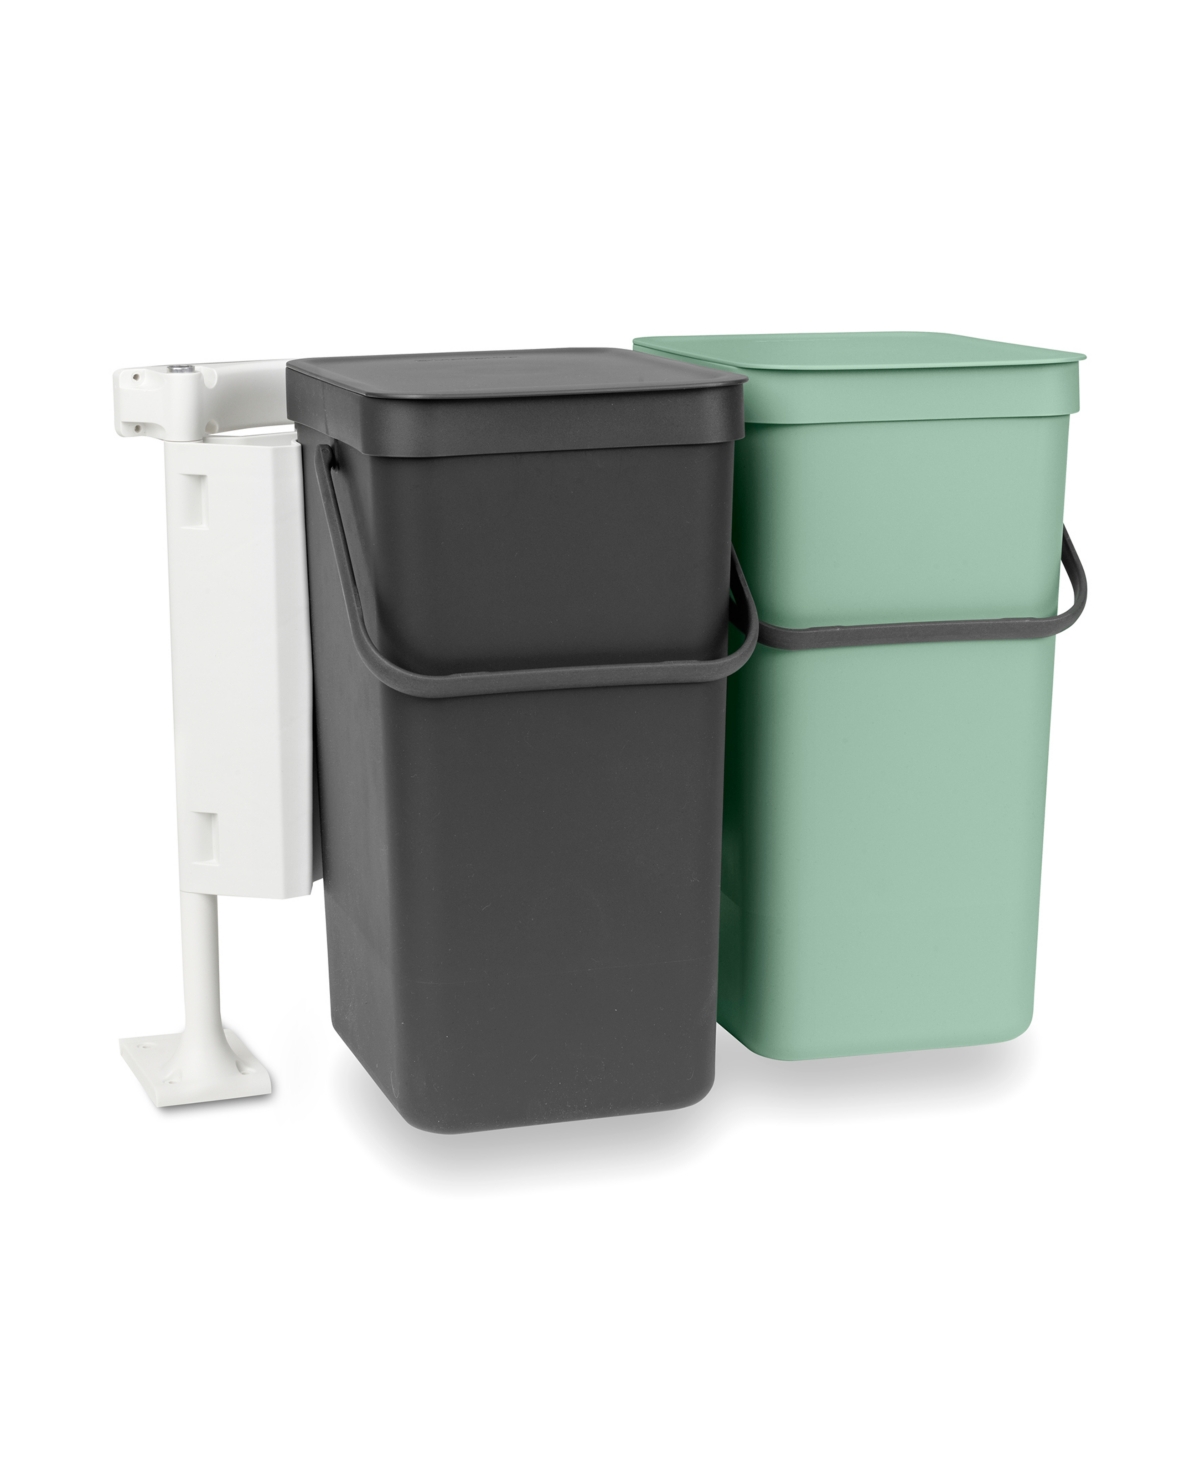 Sort Go Built-In Plastic Bin, 2 x 4.2 Gallon, 2 x 16 Liter - Jade Green, Gray